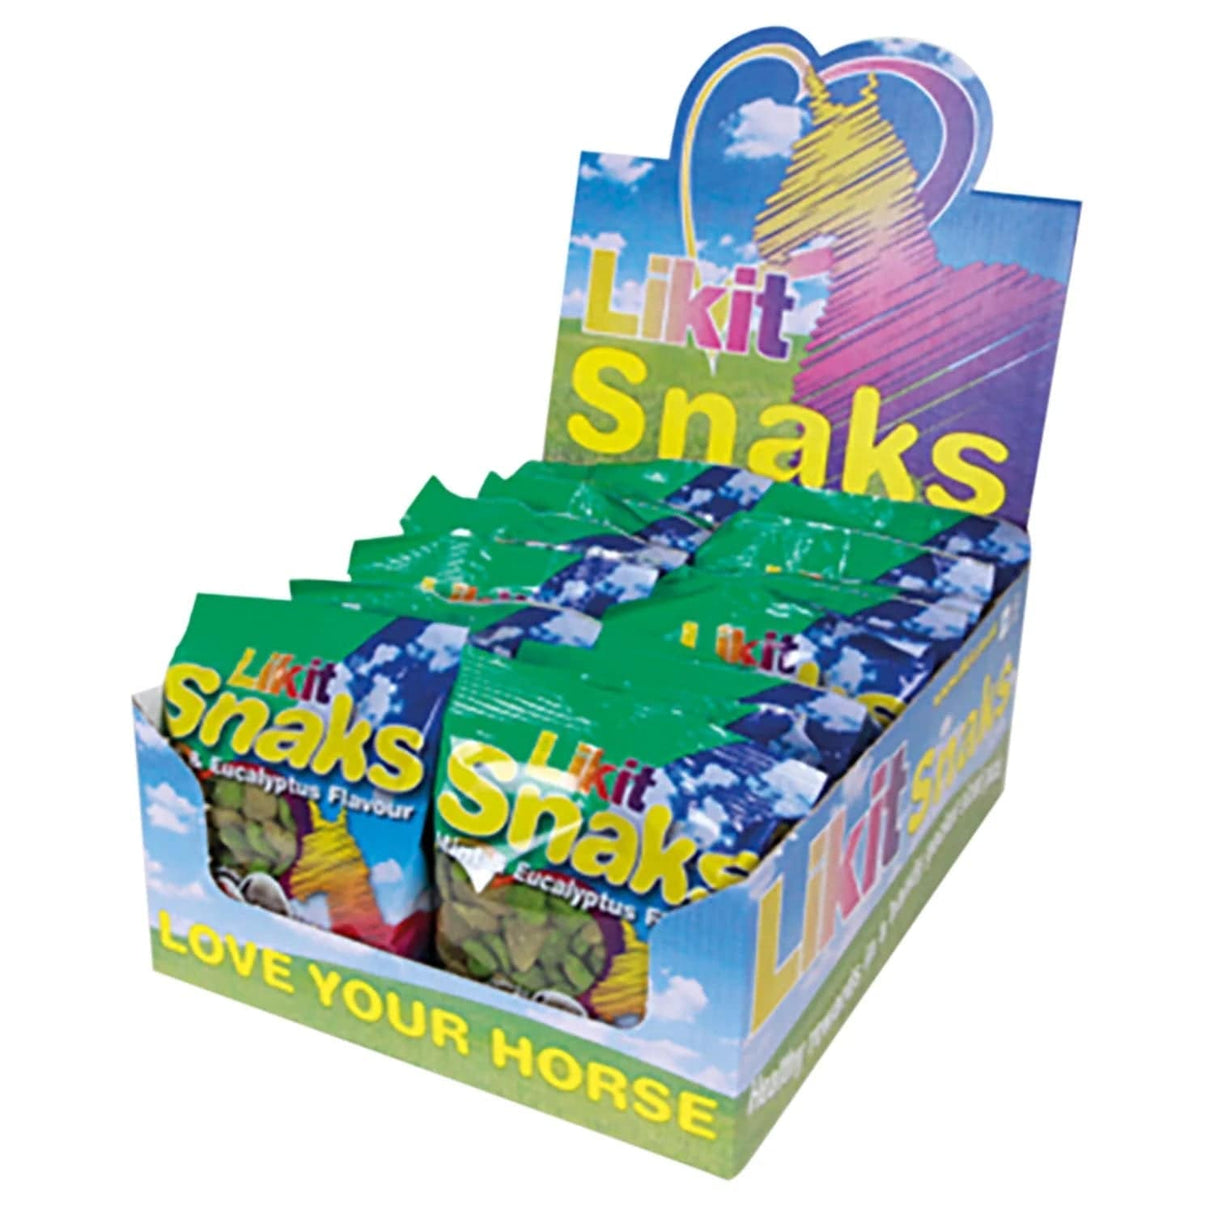 Likit Snaks Treats Bulk Buy Horse Licks Treats and Toys Apple And Cinnamon 100G X 20 Pack Barnstaple Equestrian Supplies